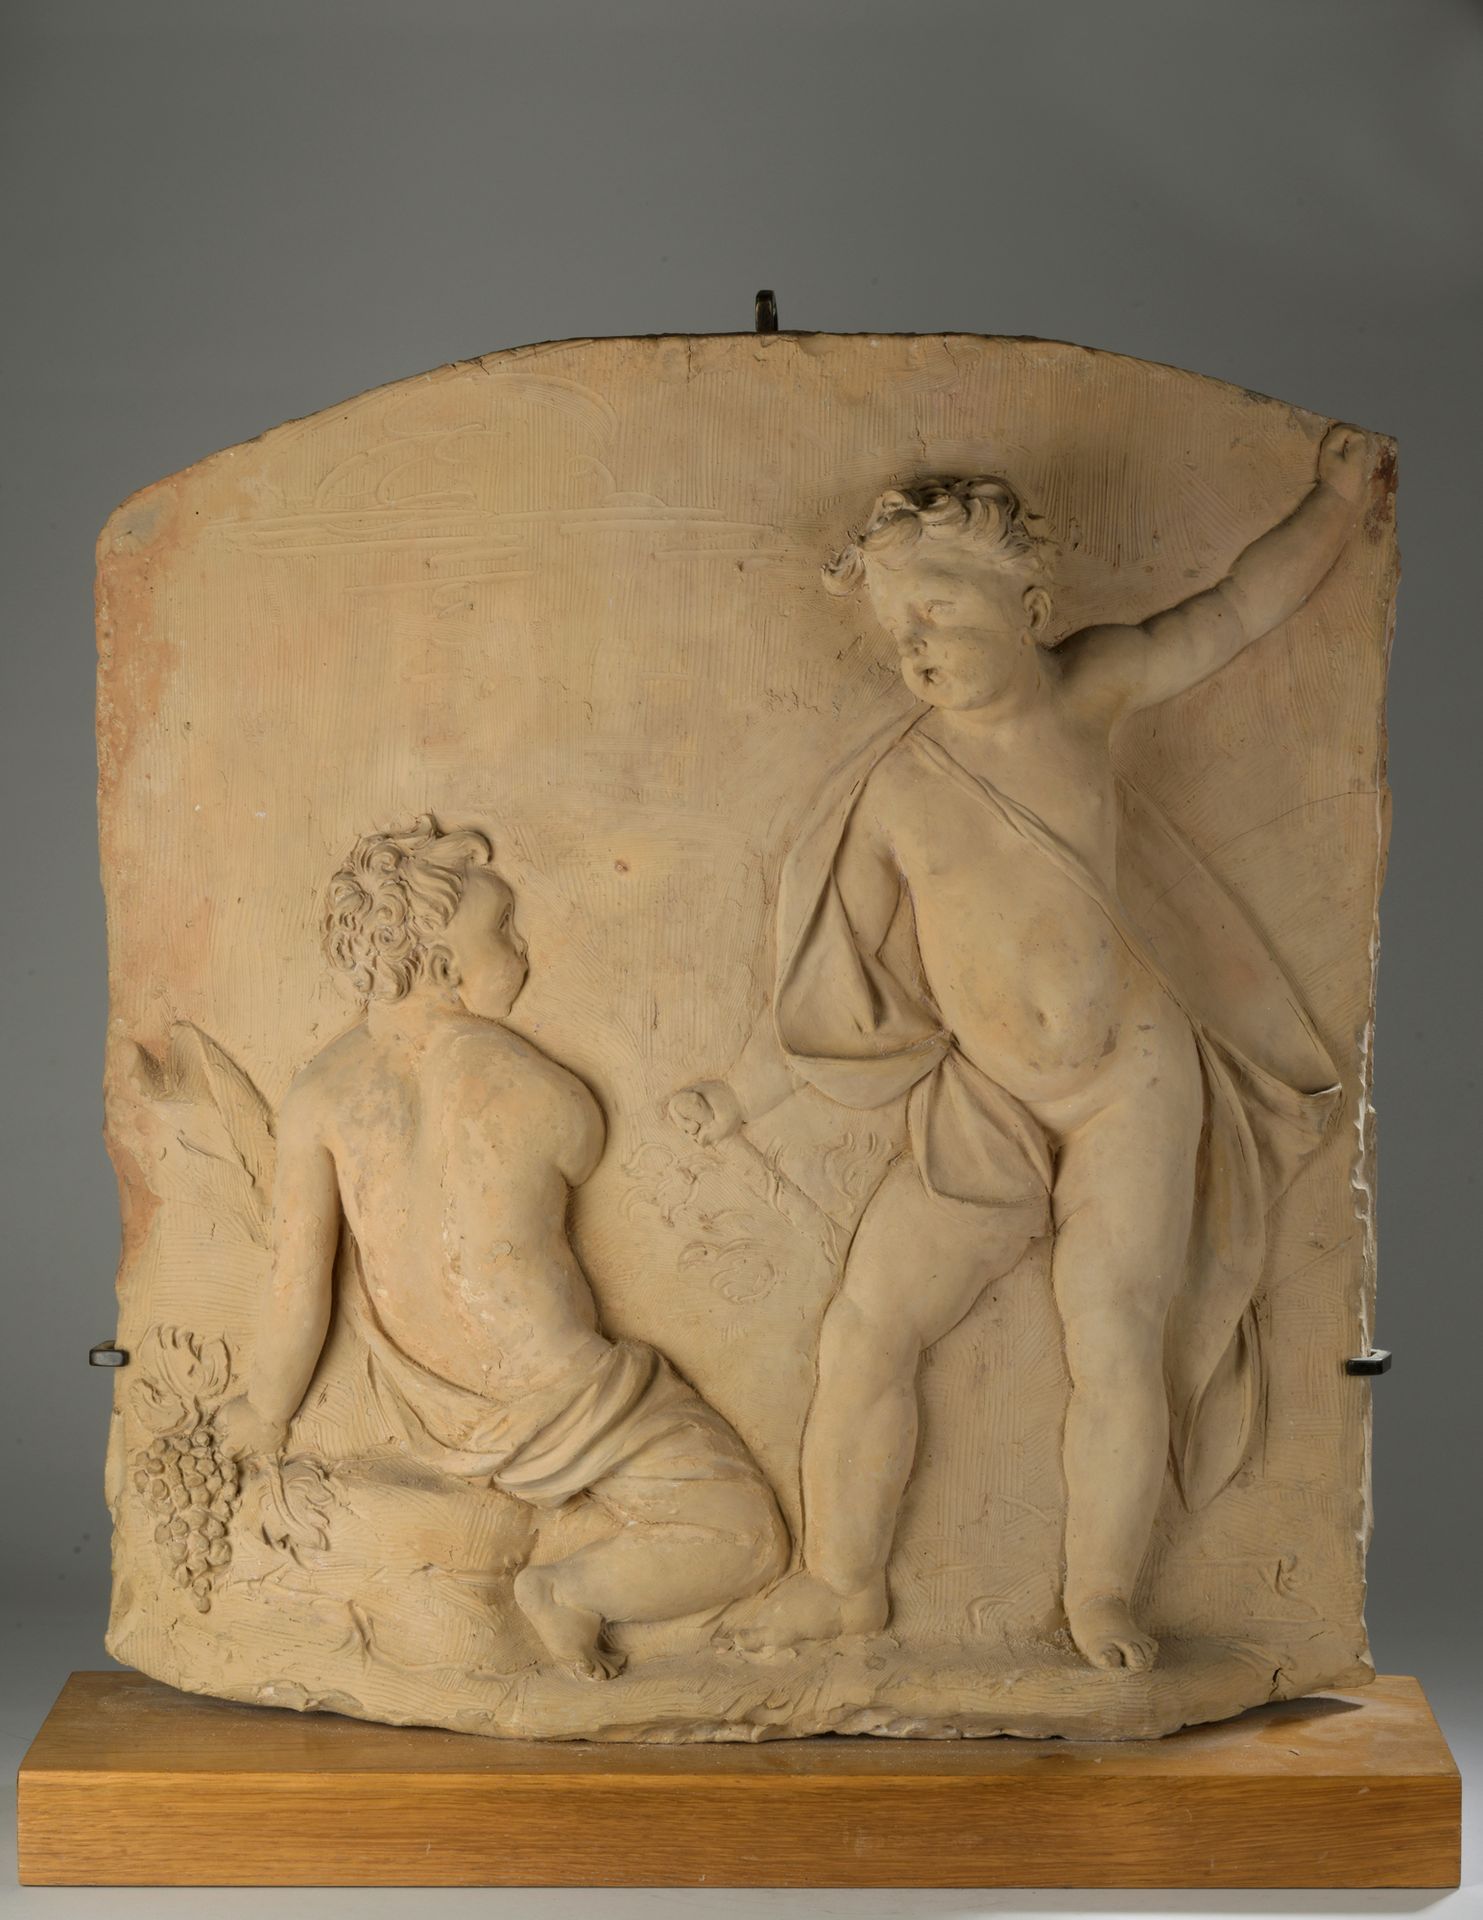 Null 18世纪的意大利学校

普提收割机

陶土浮雕 高63.5 x 宽64厘米

修缮